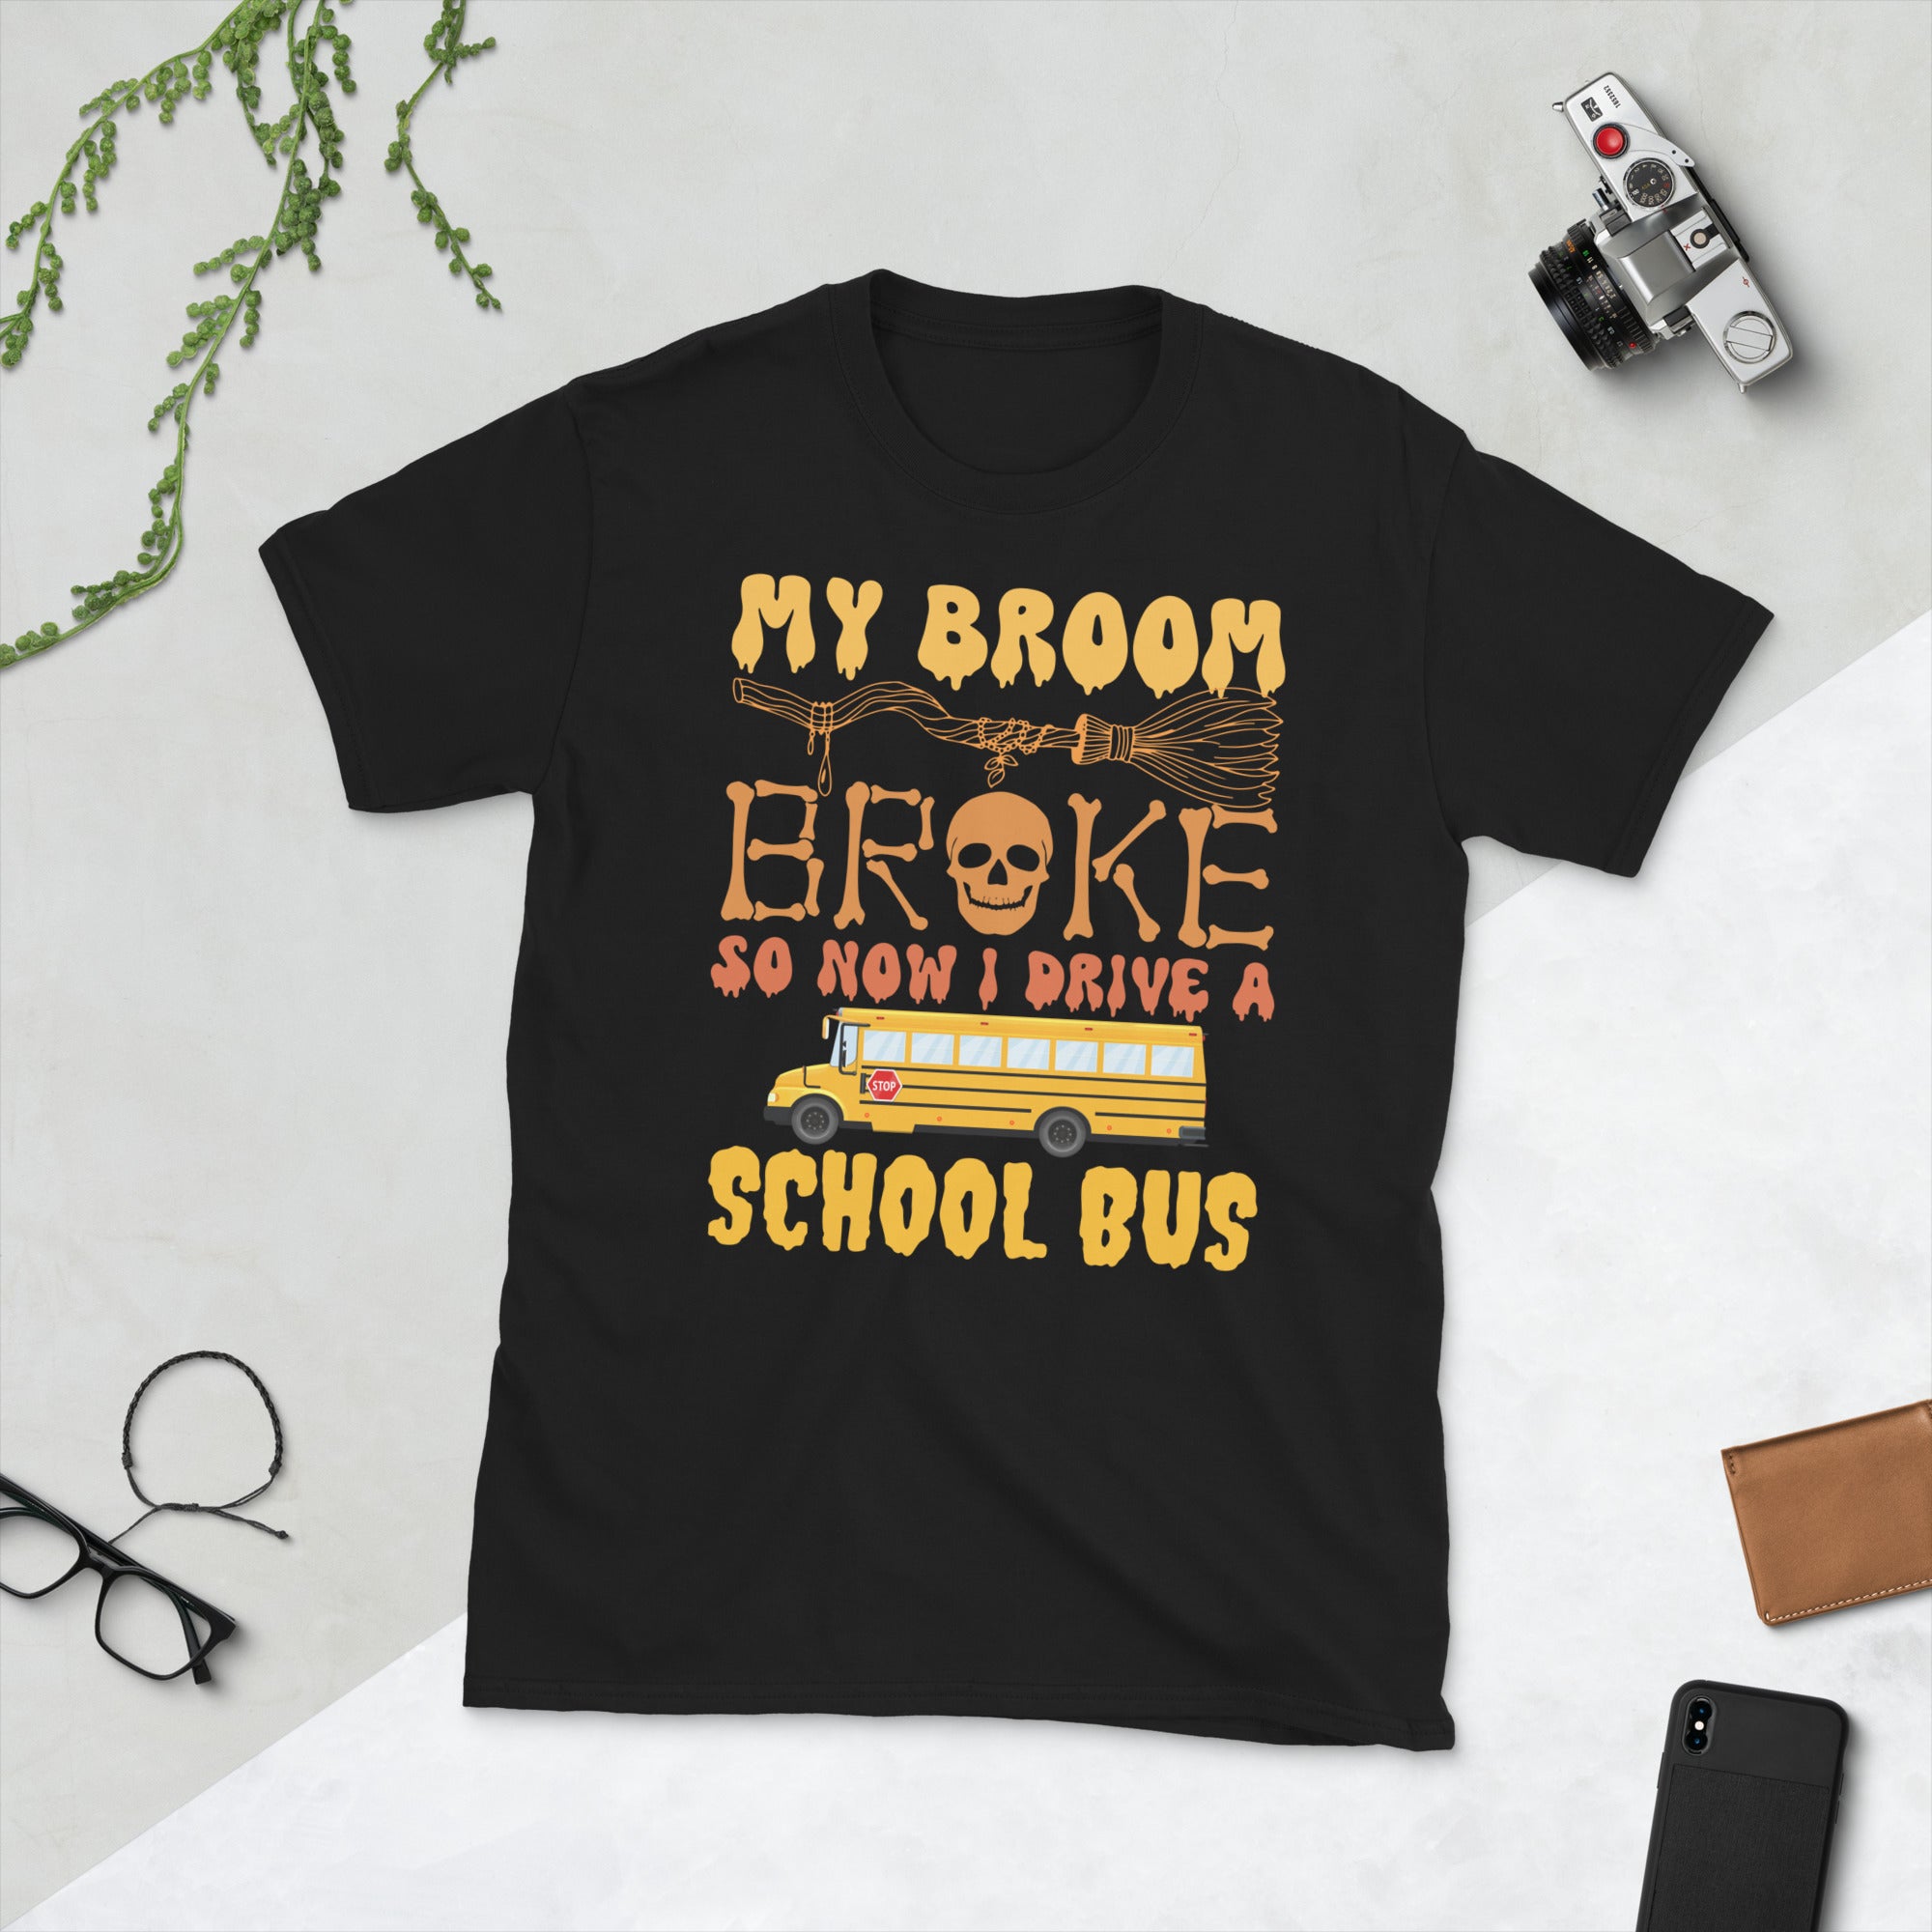 My Broom Broke So Now I Drive A School Bus, Funny Halloween Shirt, School Bus Driver Gift, Cool Halloween Groovy Tshirt, Bus Driver Costume